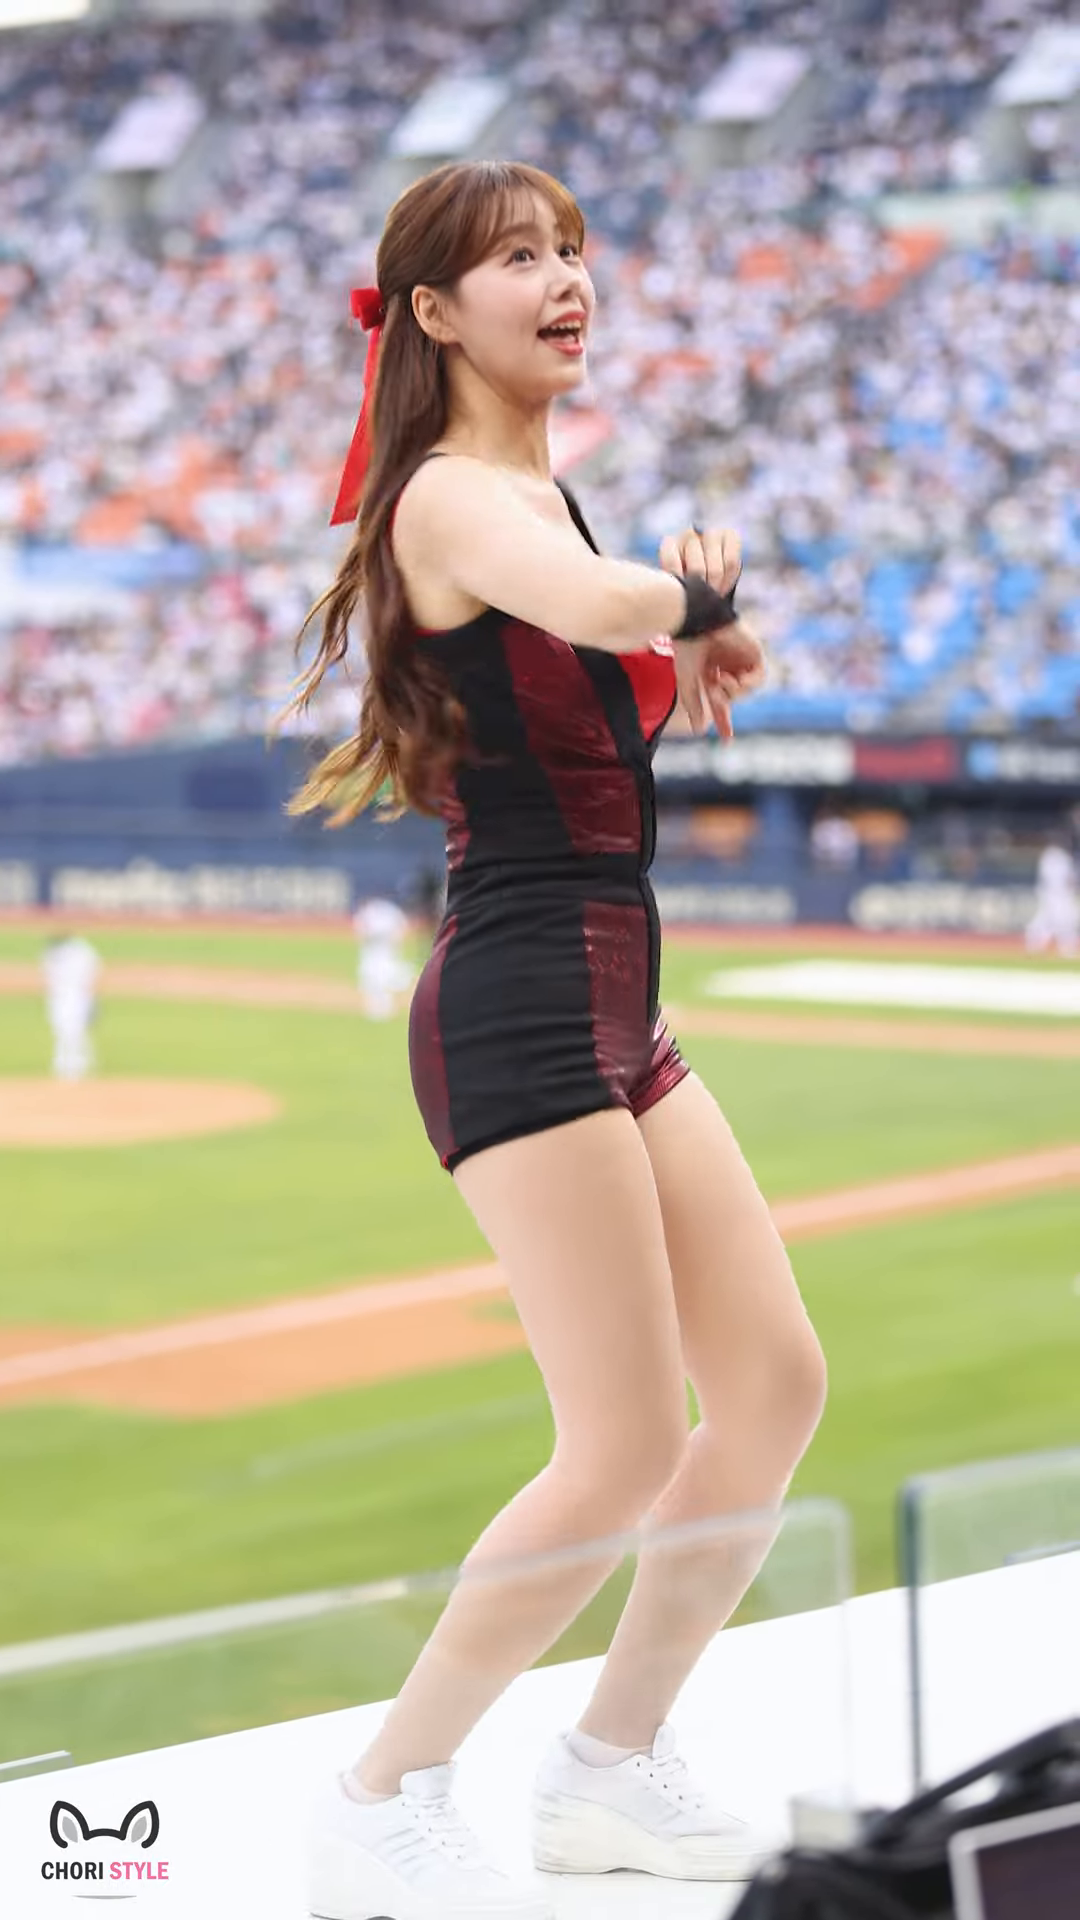 Kim Doa,Korean cherrleader,beautiful skin, butt 8